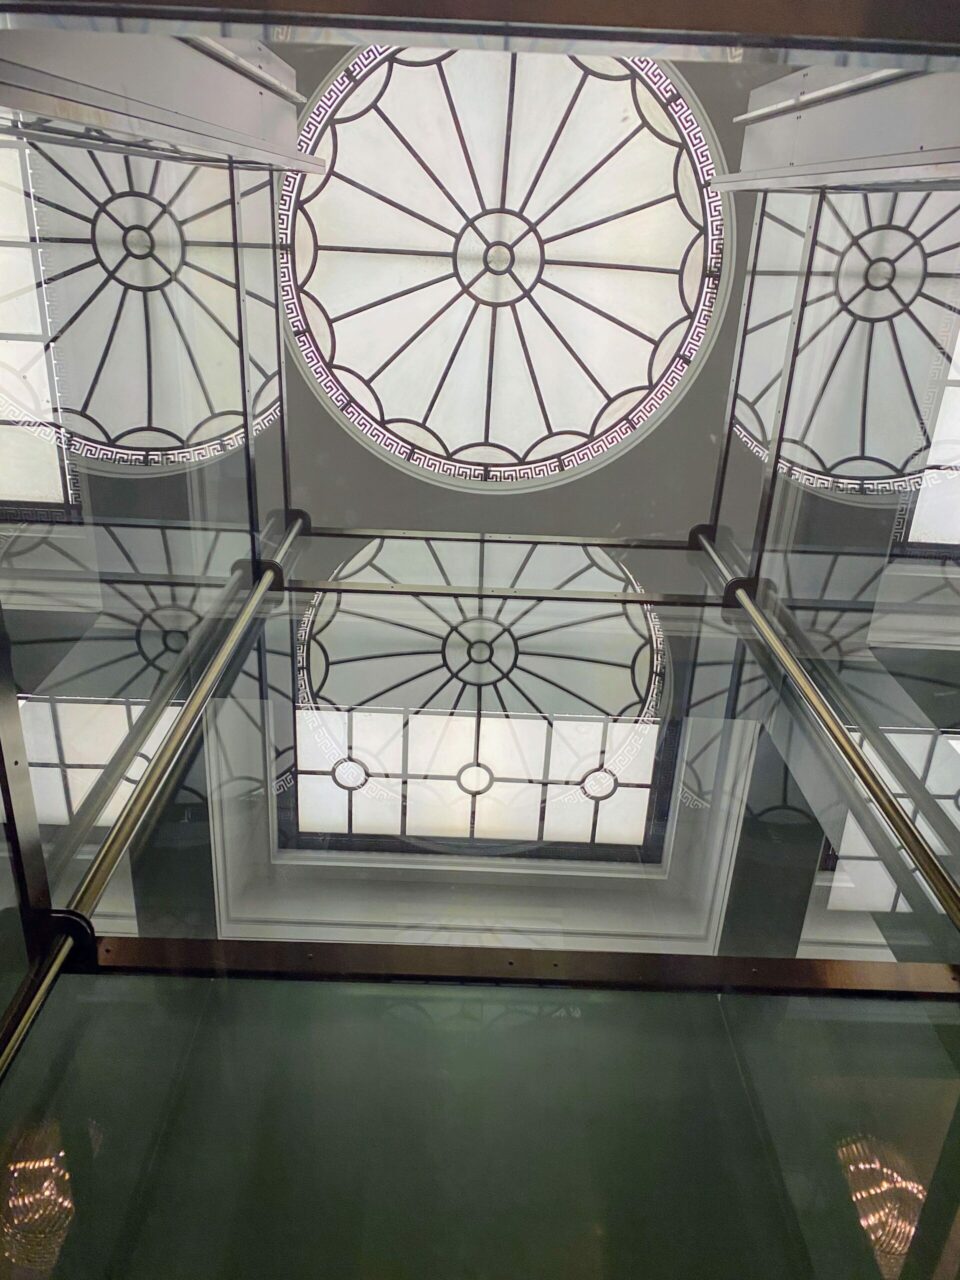 Four Seasons Hotel London elevator look above